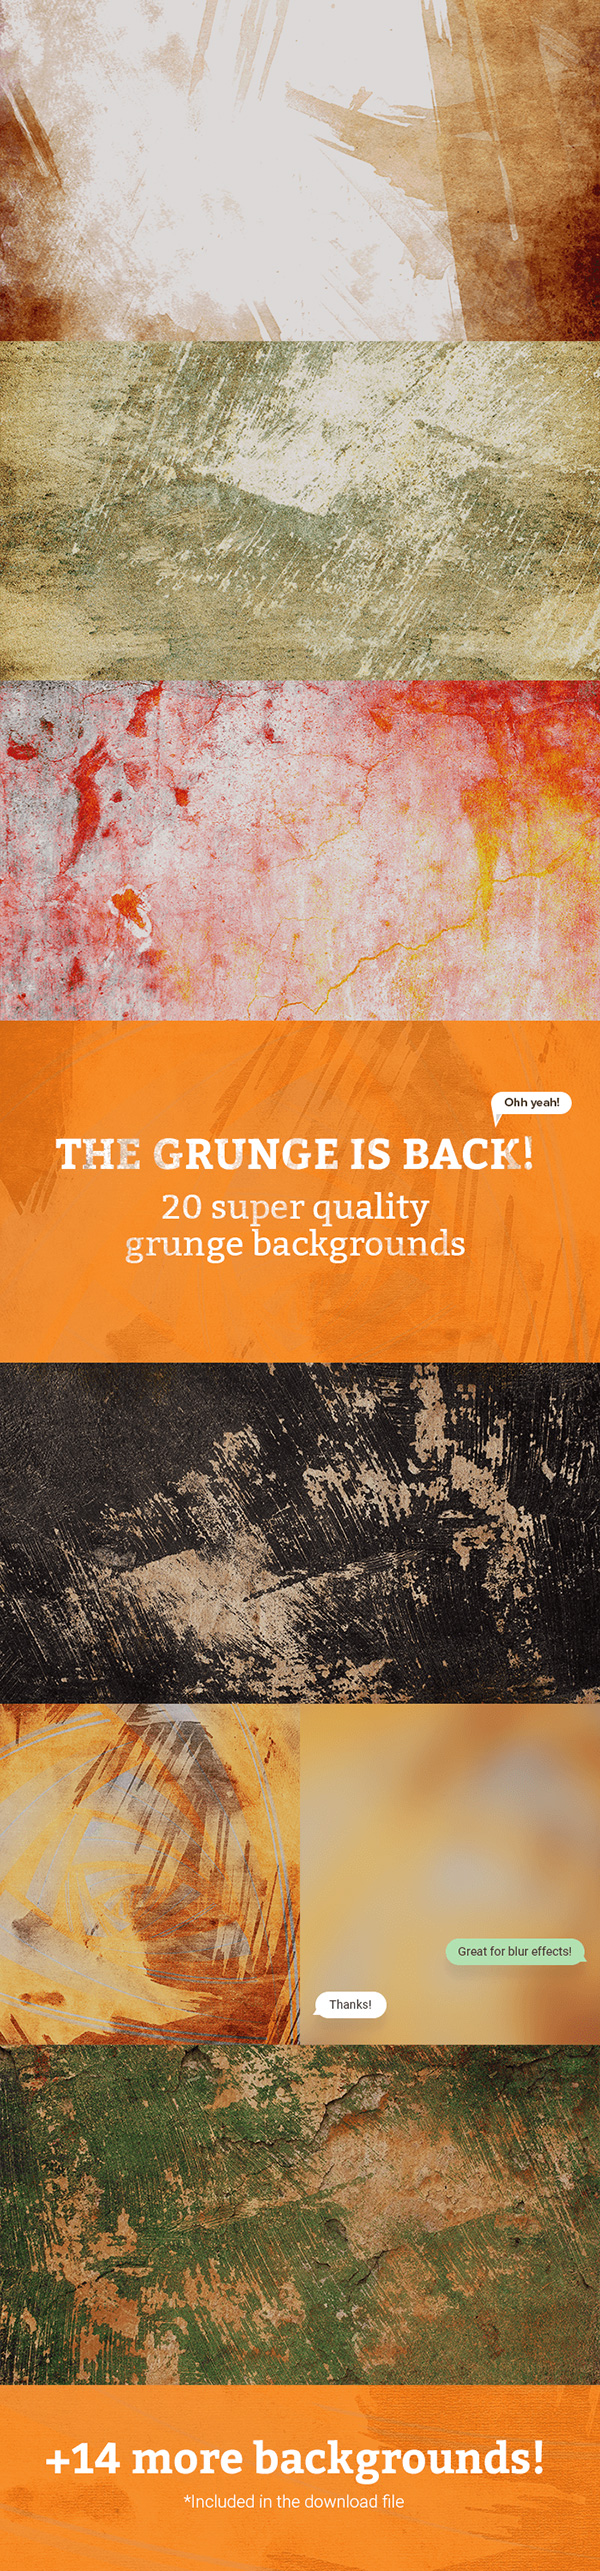 20 Free Grunge Backgrounds